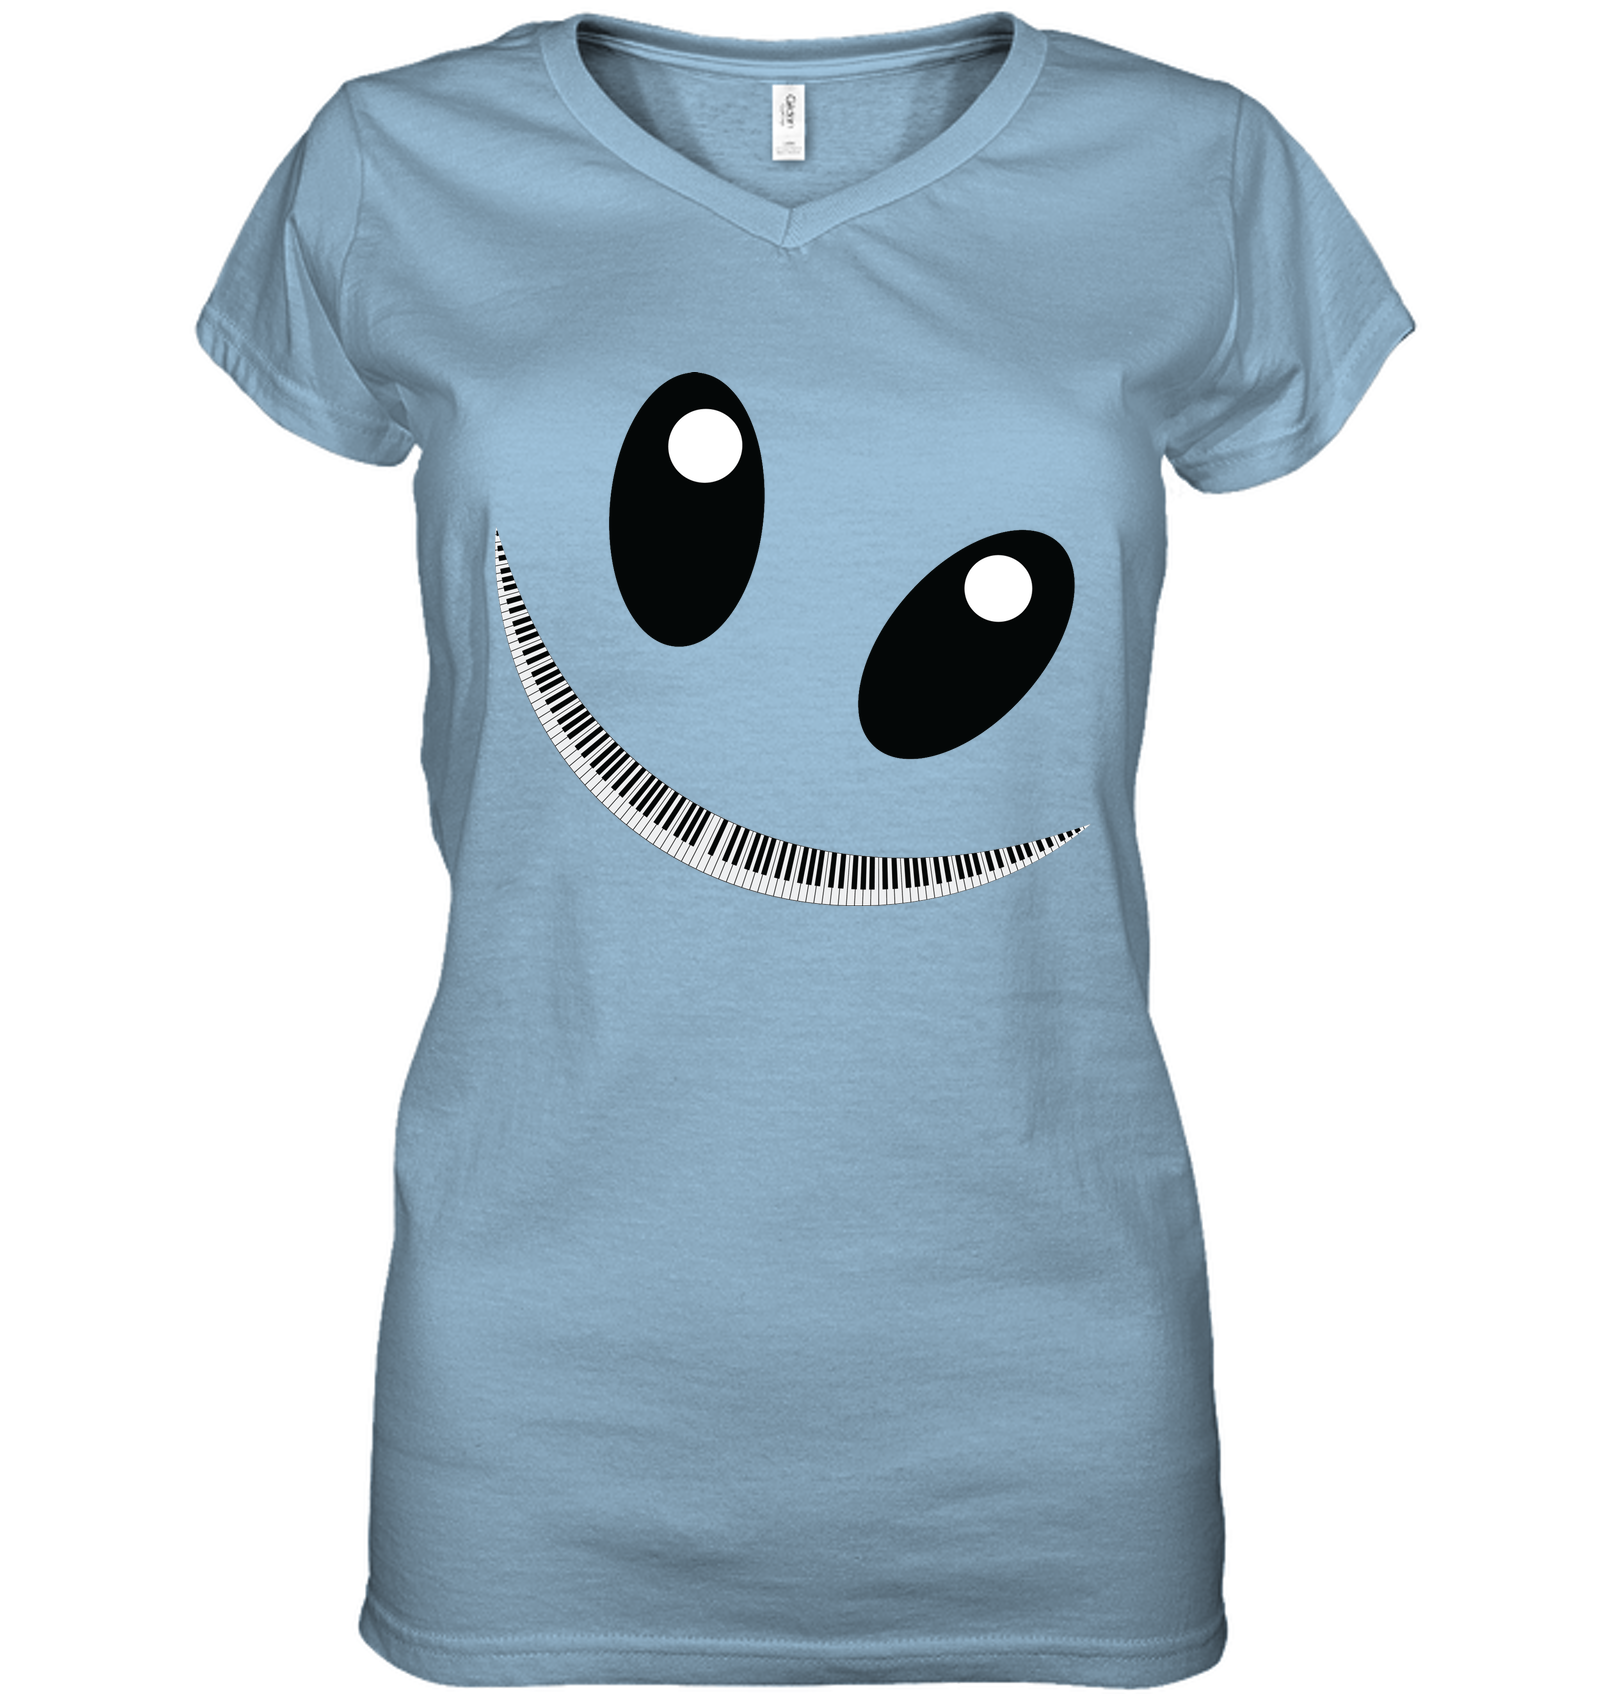 Keyboard Mouth - Hanes Women's Nano-T® V-Neck T-Shirt